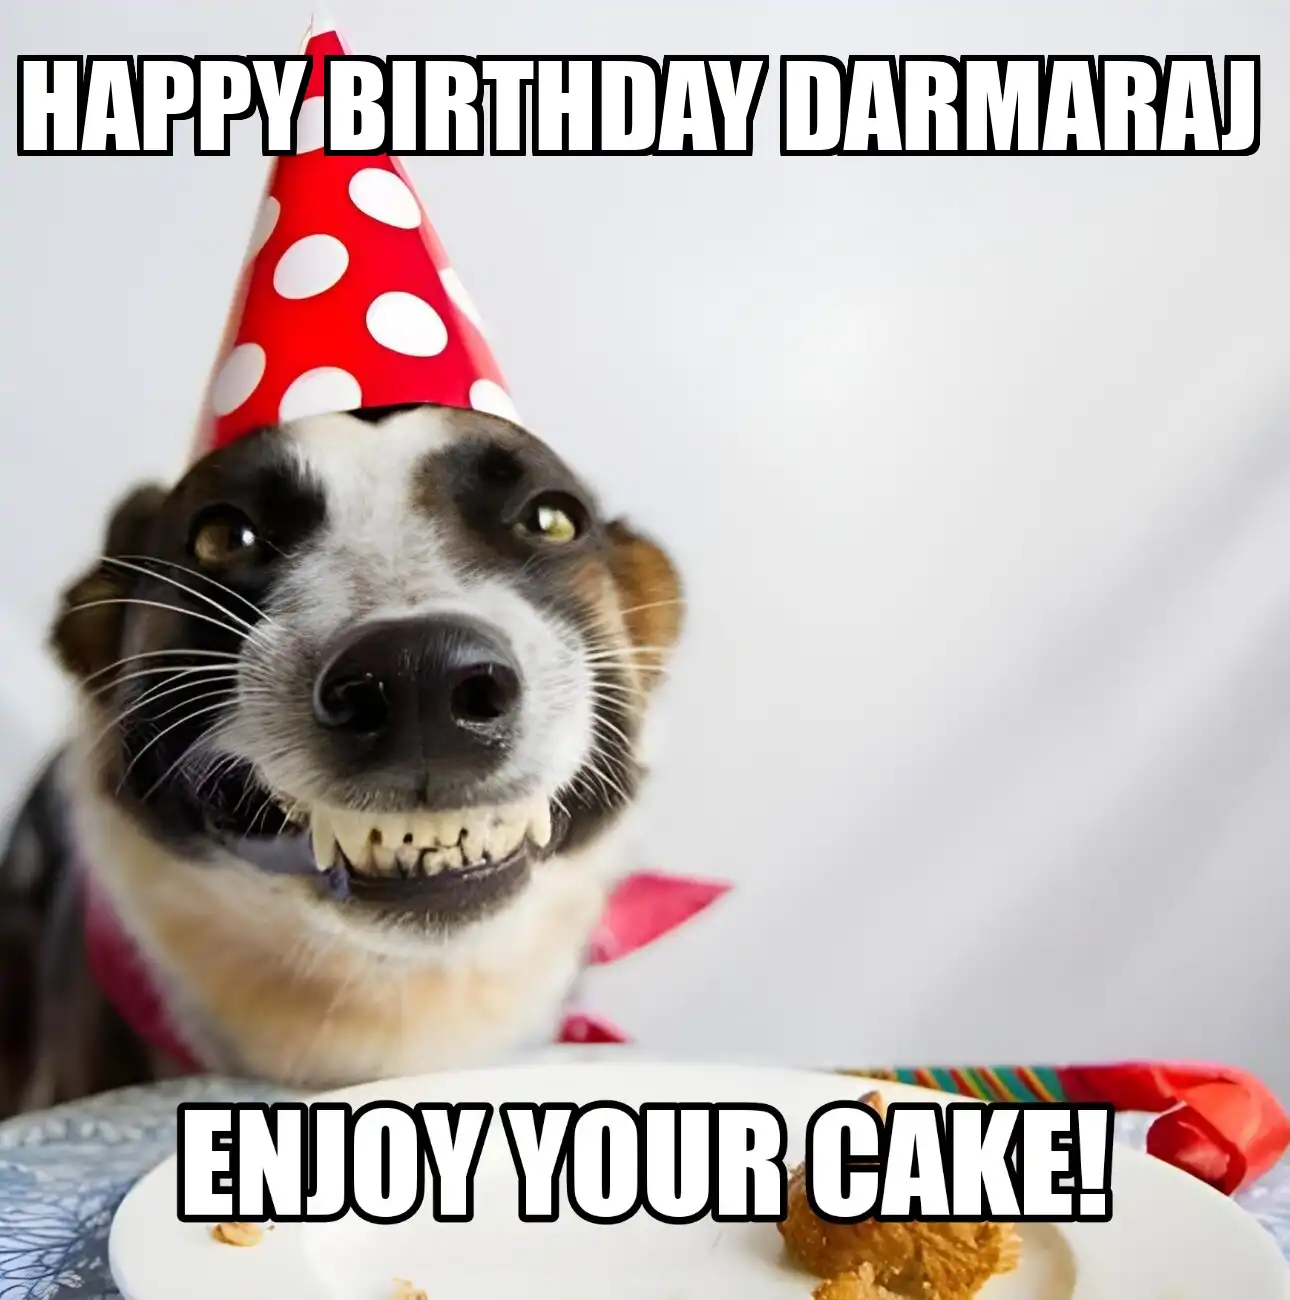 Happy Birthday Darmaraj Enjoy Your Cake Dog Meme